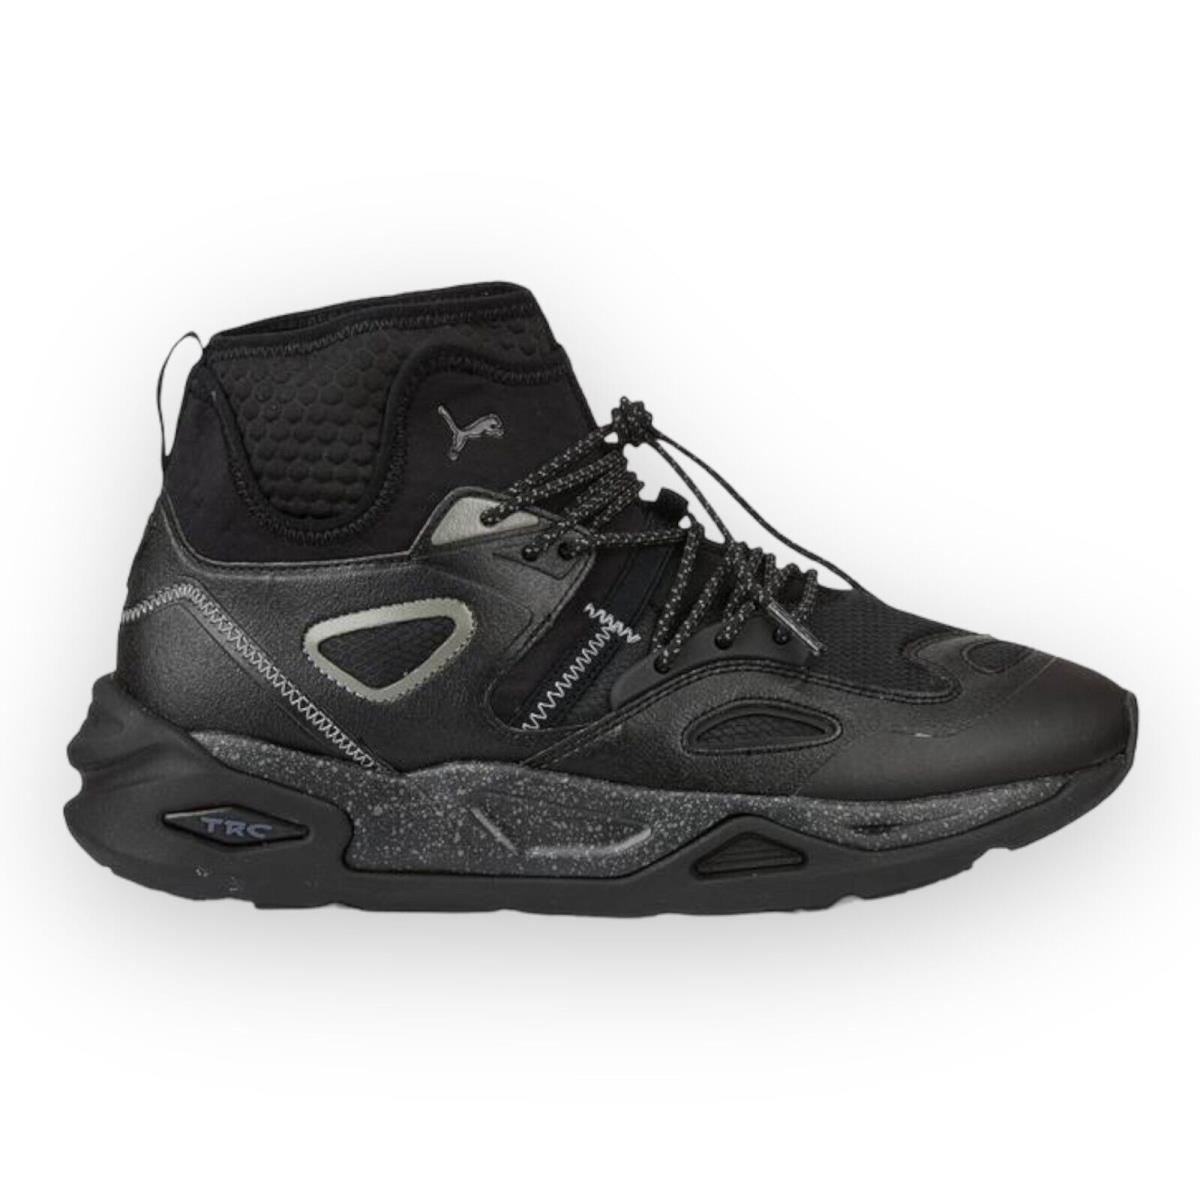 Puma Men`s Trc Blaze Mide Core WS Sneakers 386621 01 - Black